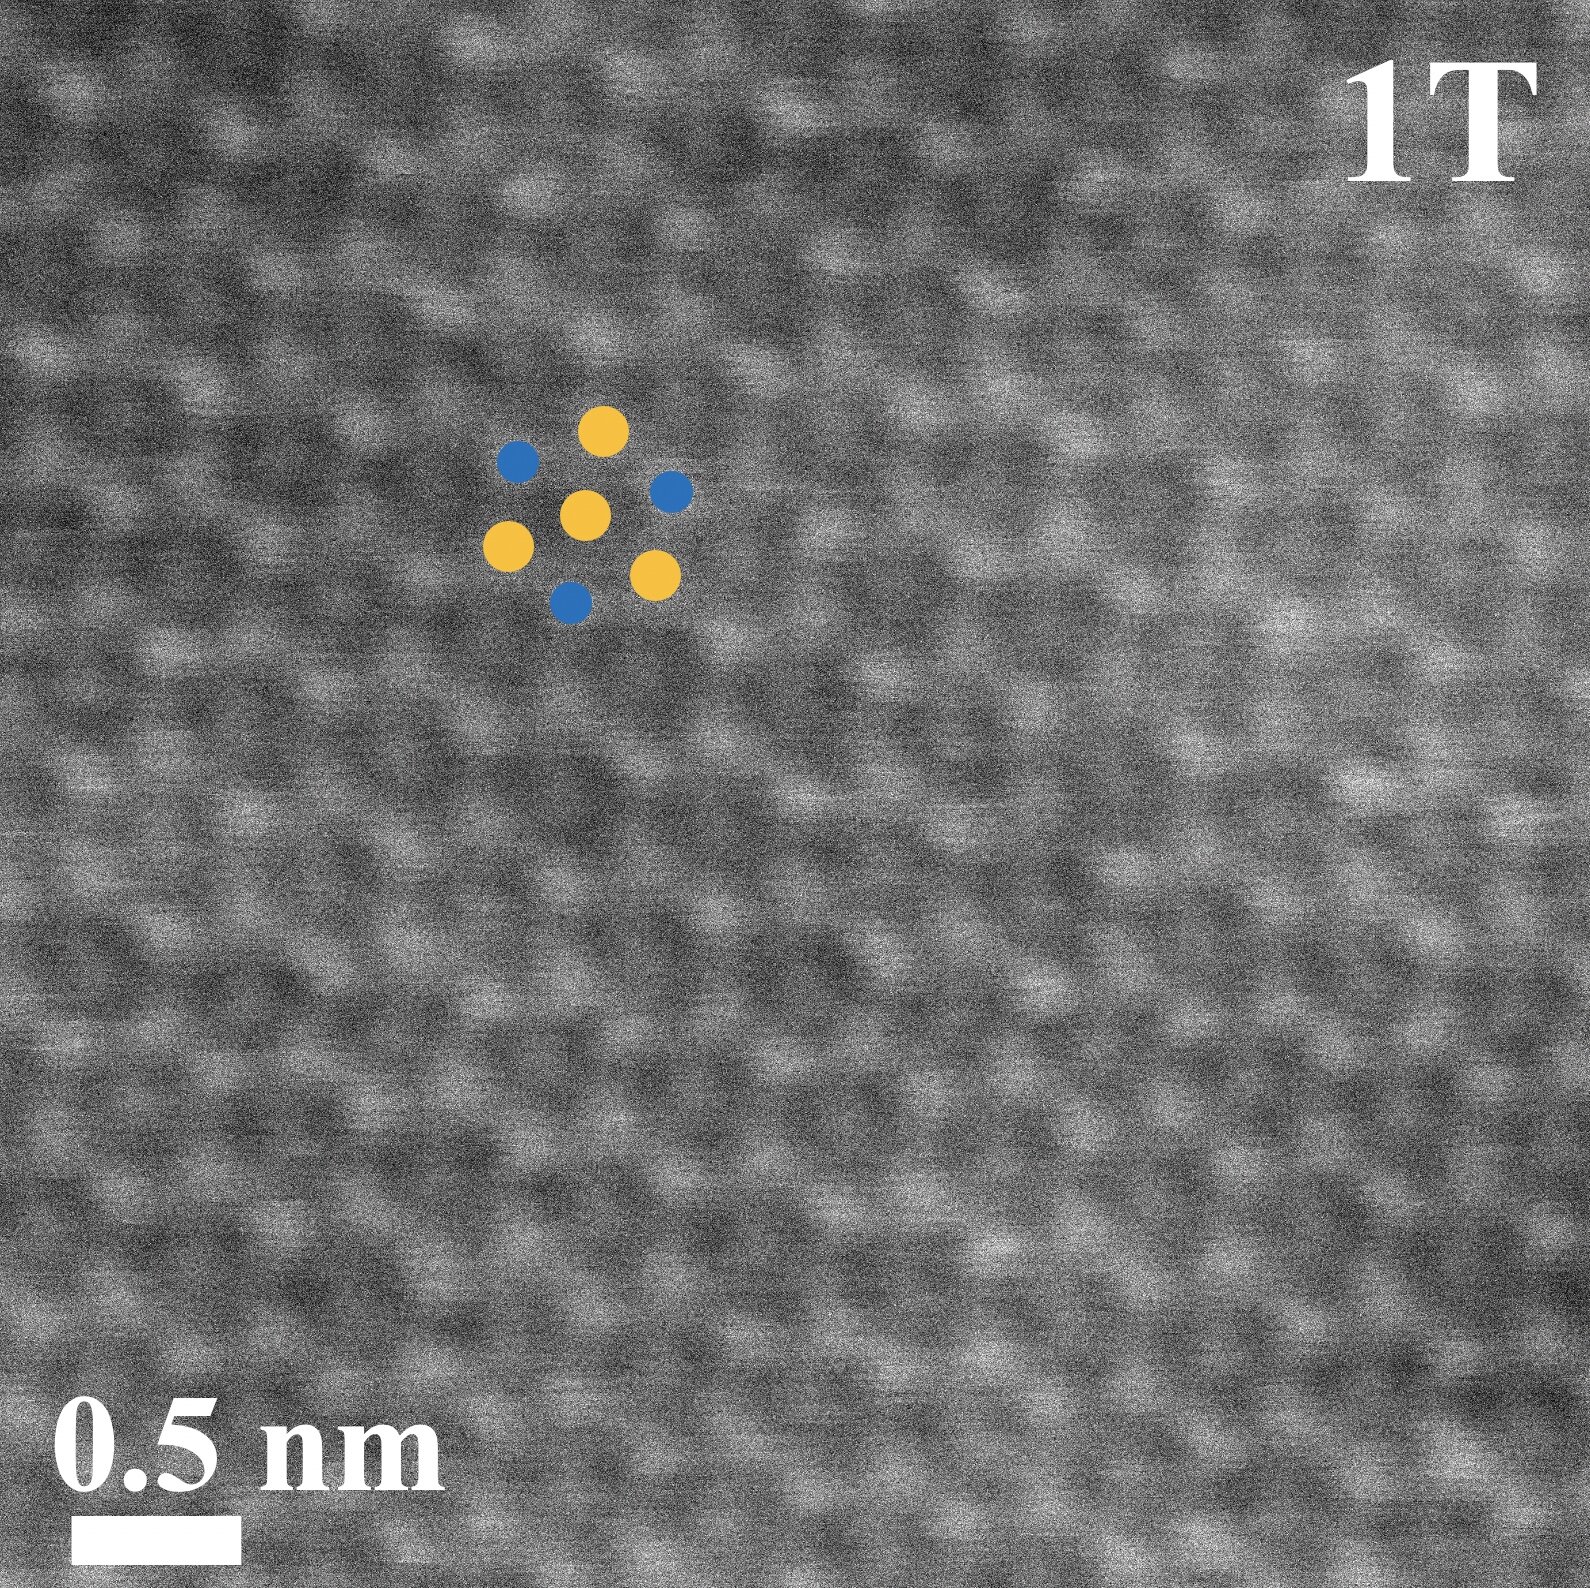 Metastable metallic nano FIG 2